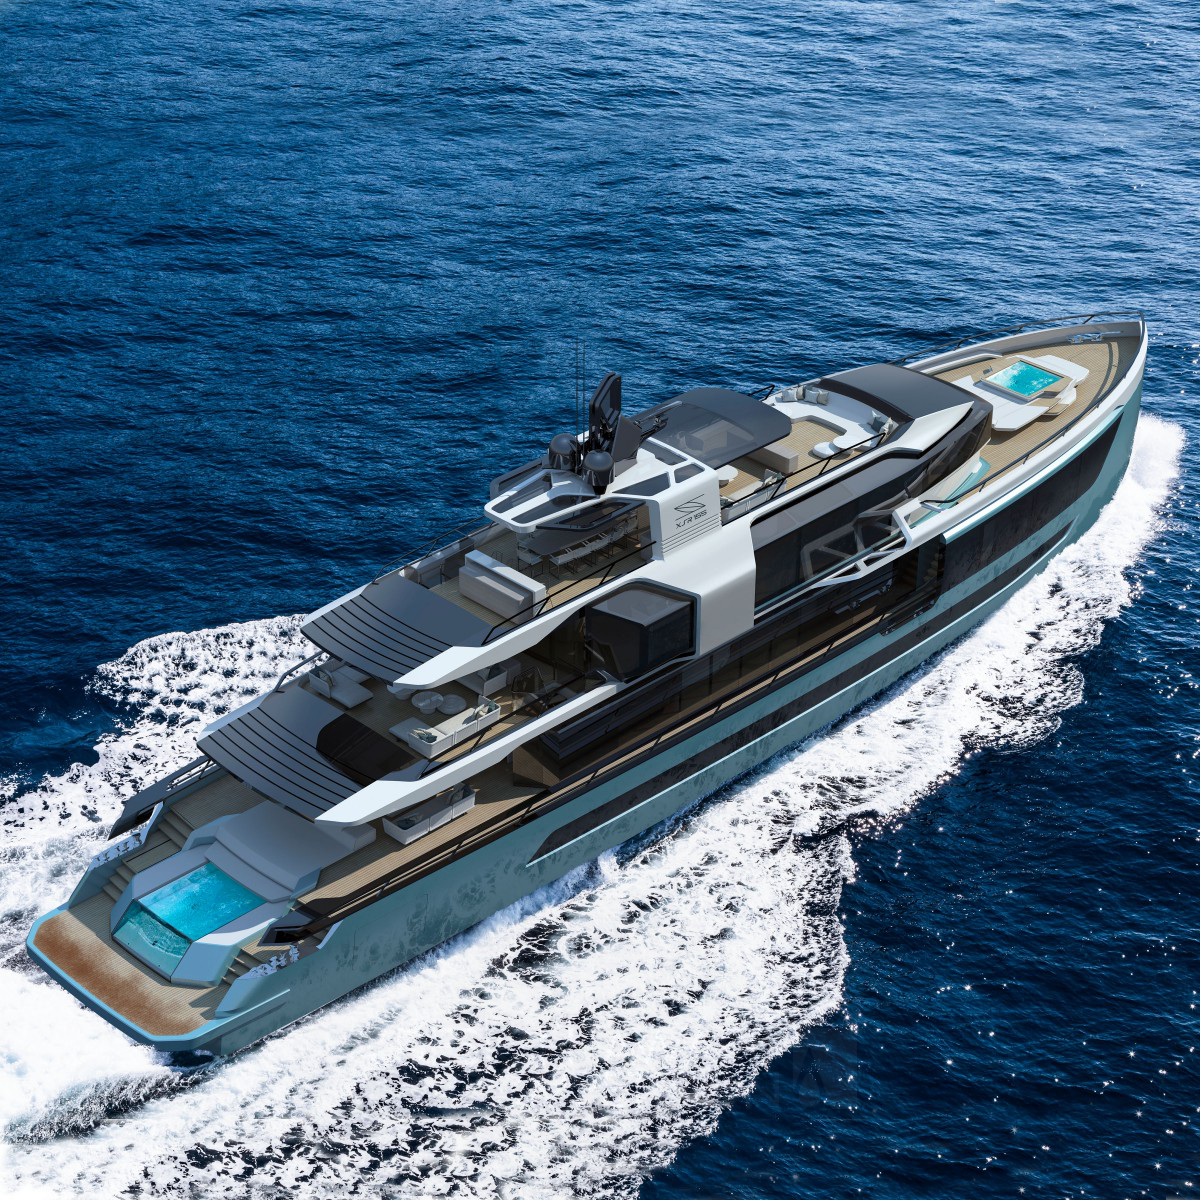 Xsr 155 Yacht by Sarp Yachts Platinum Yacht and Marine Vessels Design Award Winner 2019 